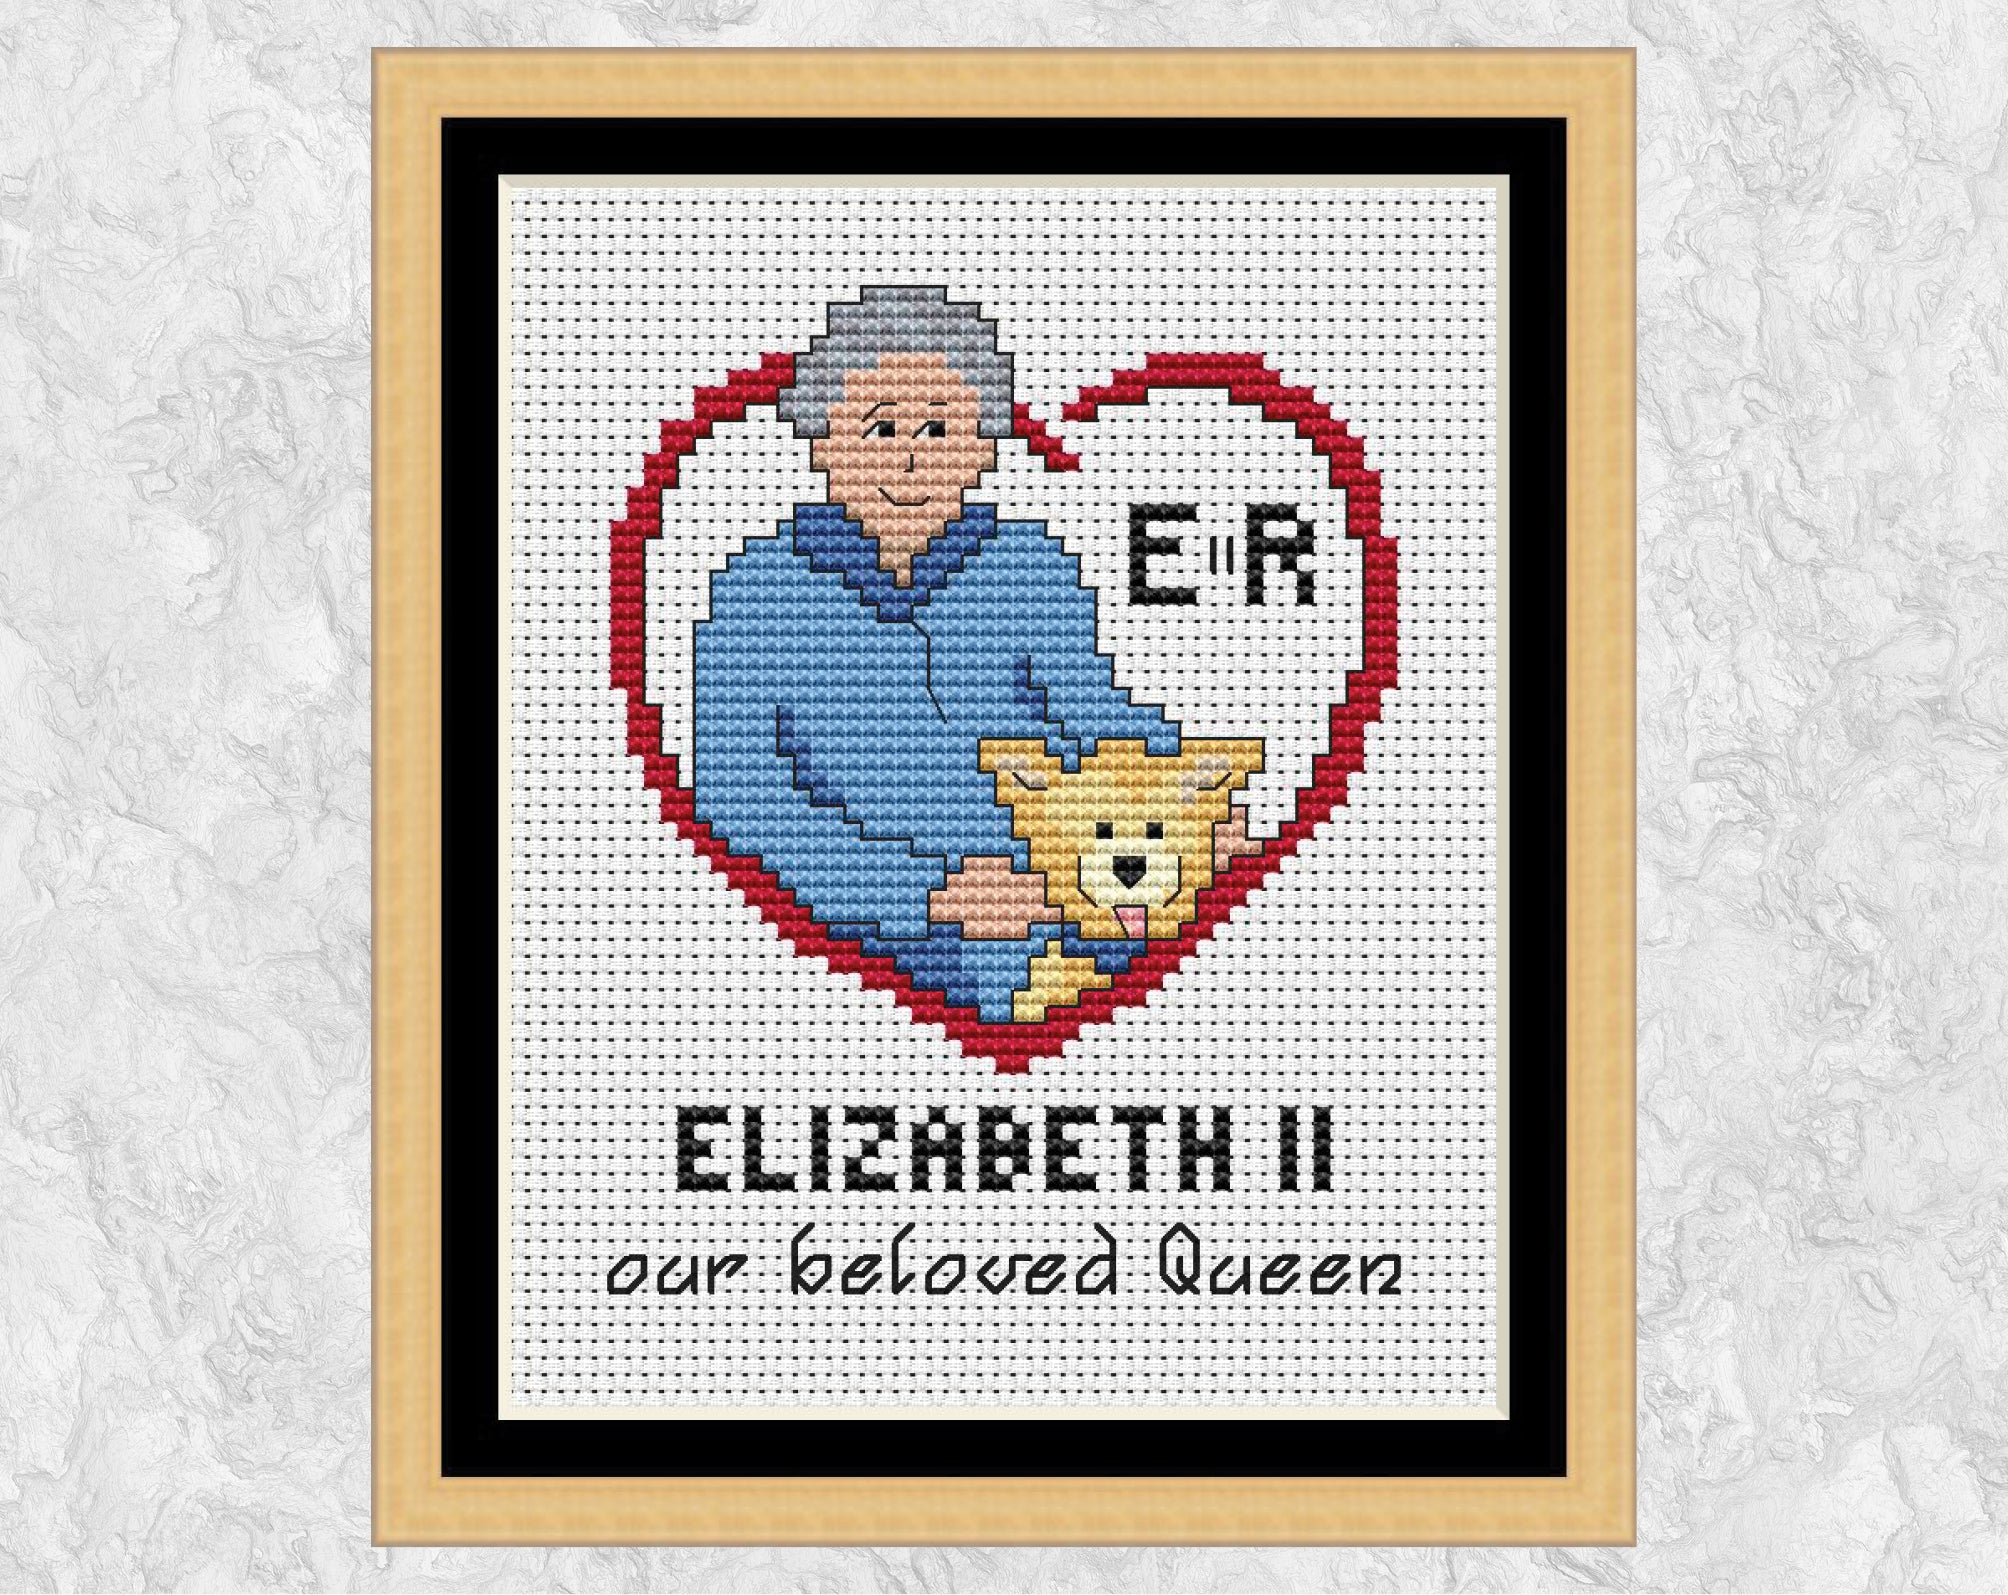 Queen Elizabeth II cross stitch pattern. Shown with frame.